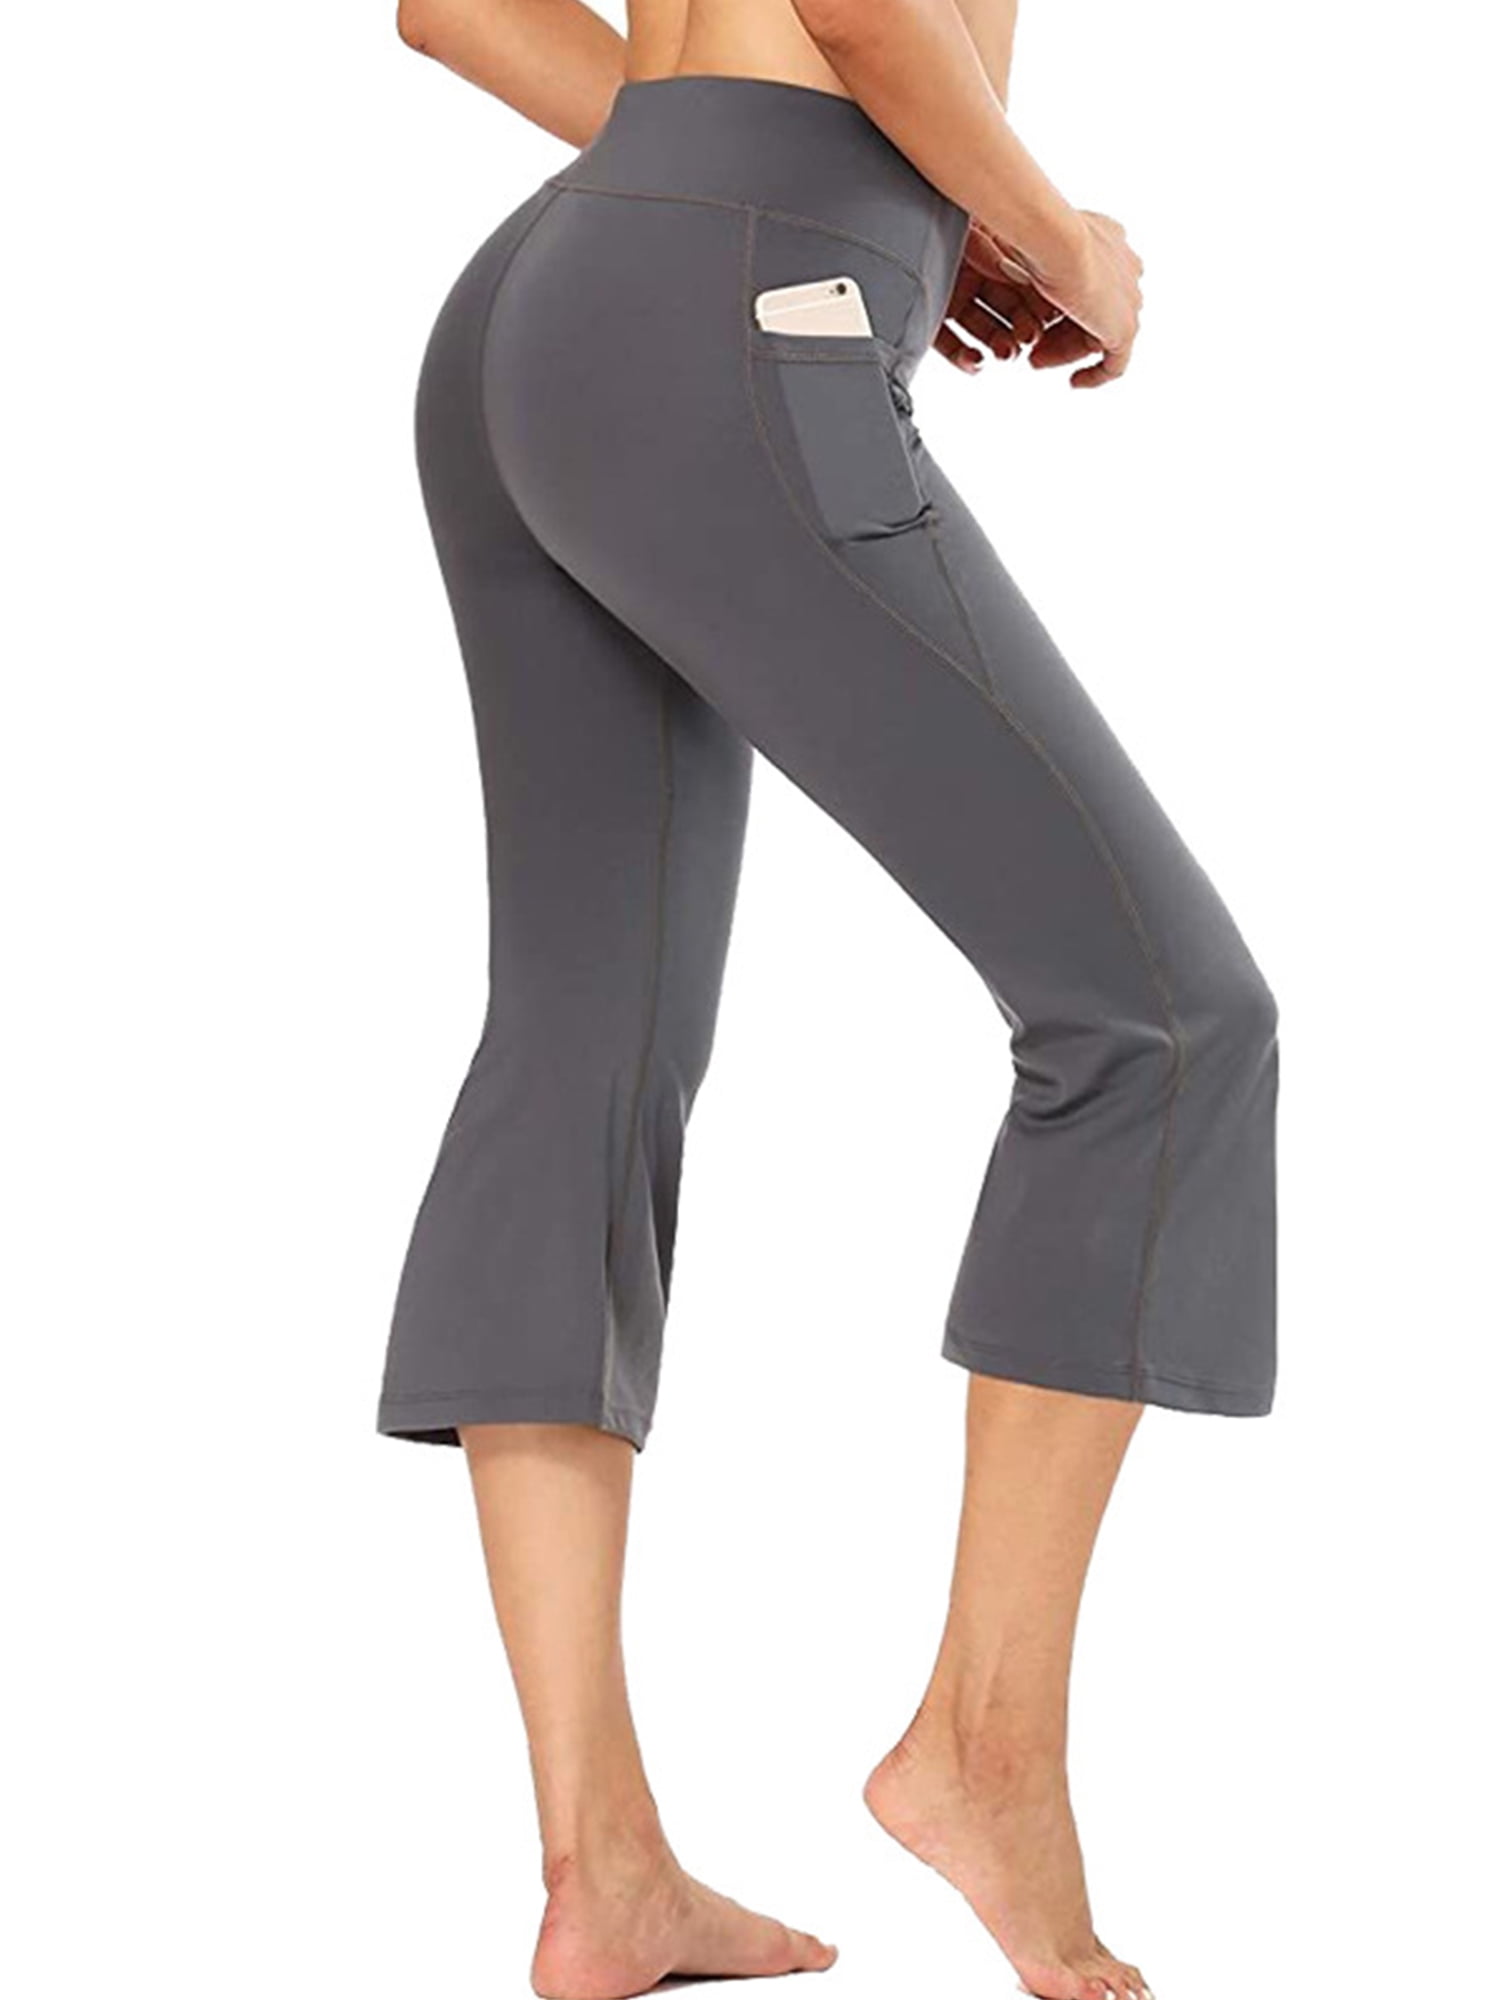 Avamo Women Bootcut Yoga Pants Pockets Lounge Activewear Capri